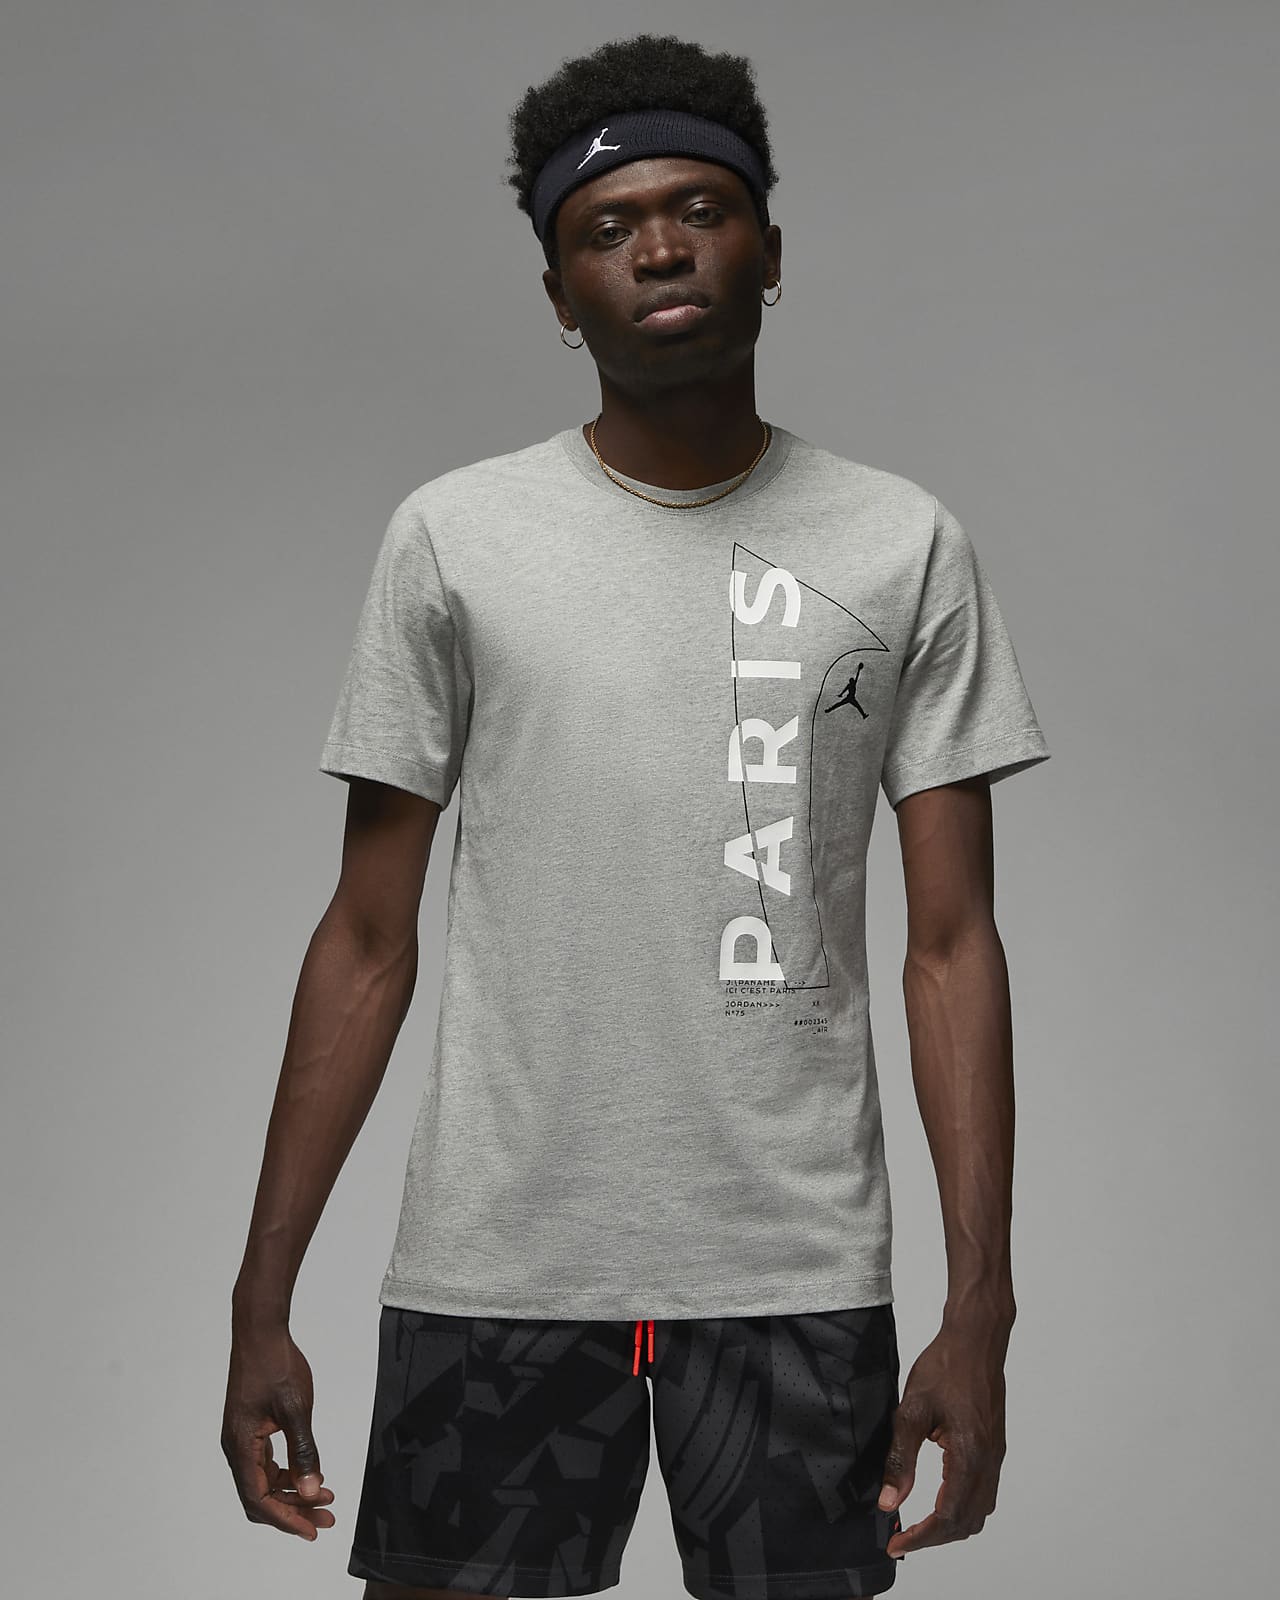 Faret vild Ithaca når som helst Paris Saint-Germain Men's T-Shirt. Nike ID